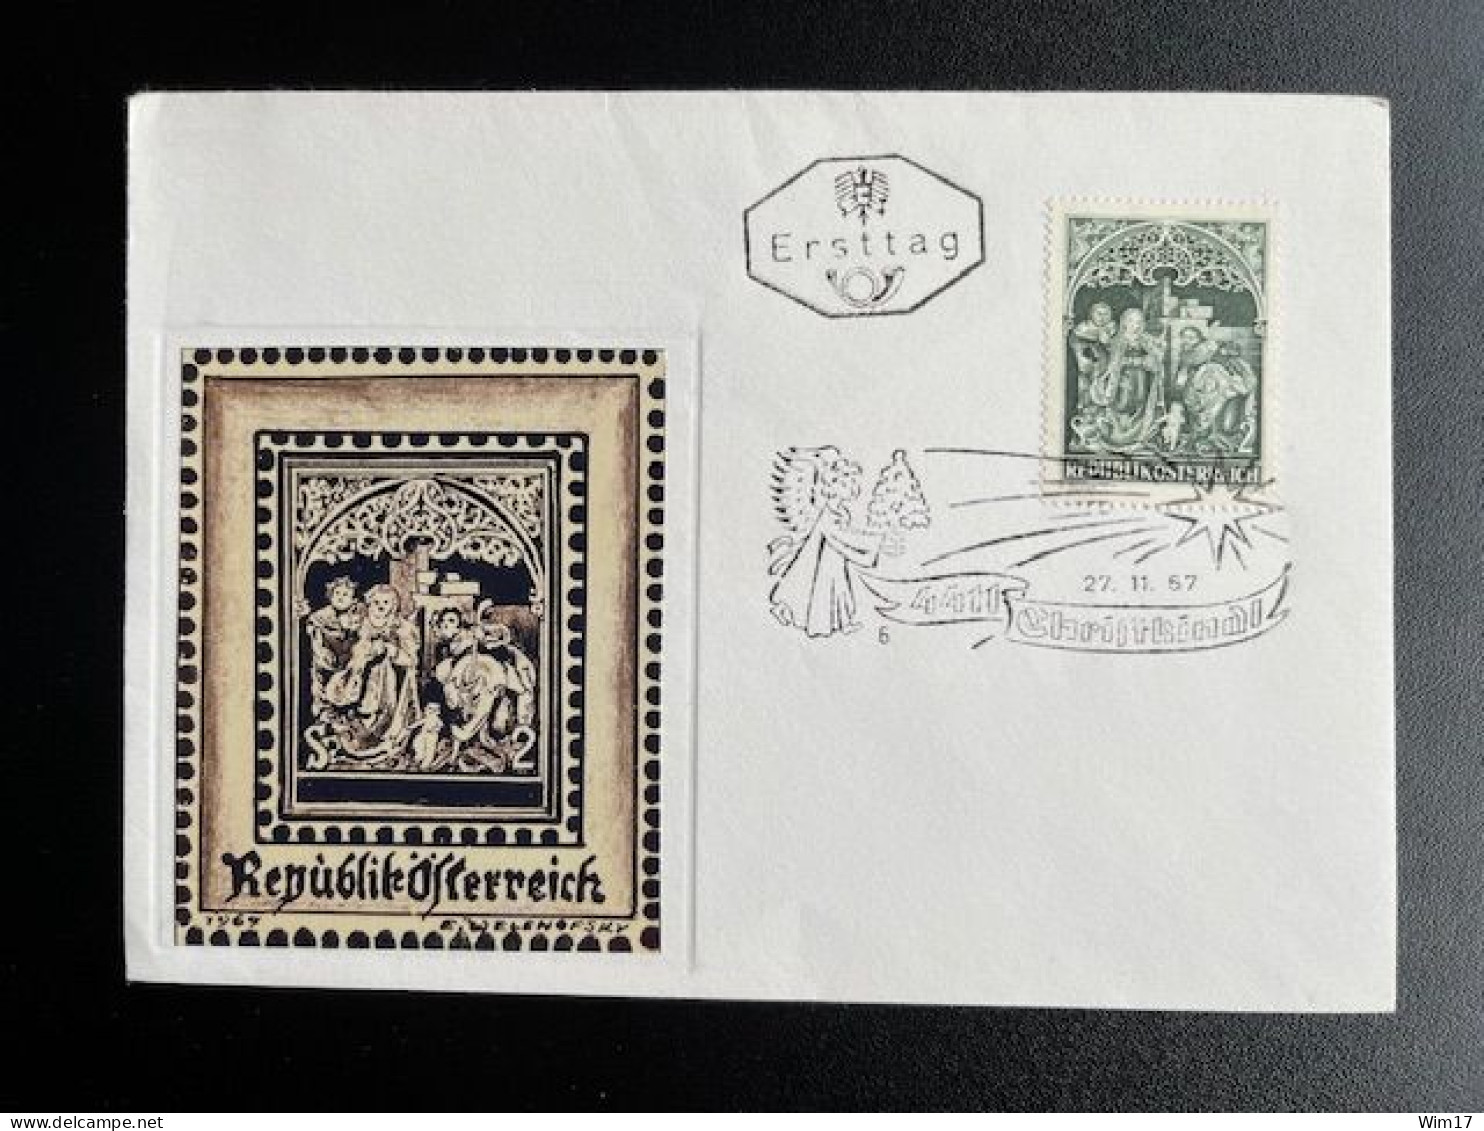 AUSTRIA 1967 FDC CHRISTKINDL 27-11-1967 OOSTENRIJK OSTERREICH - Lettres & Documents